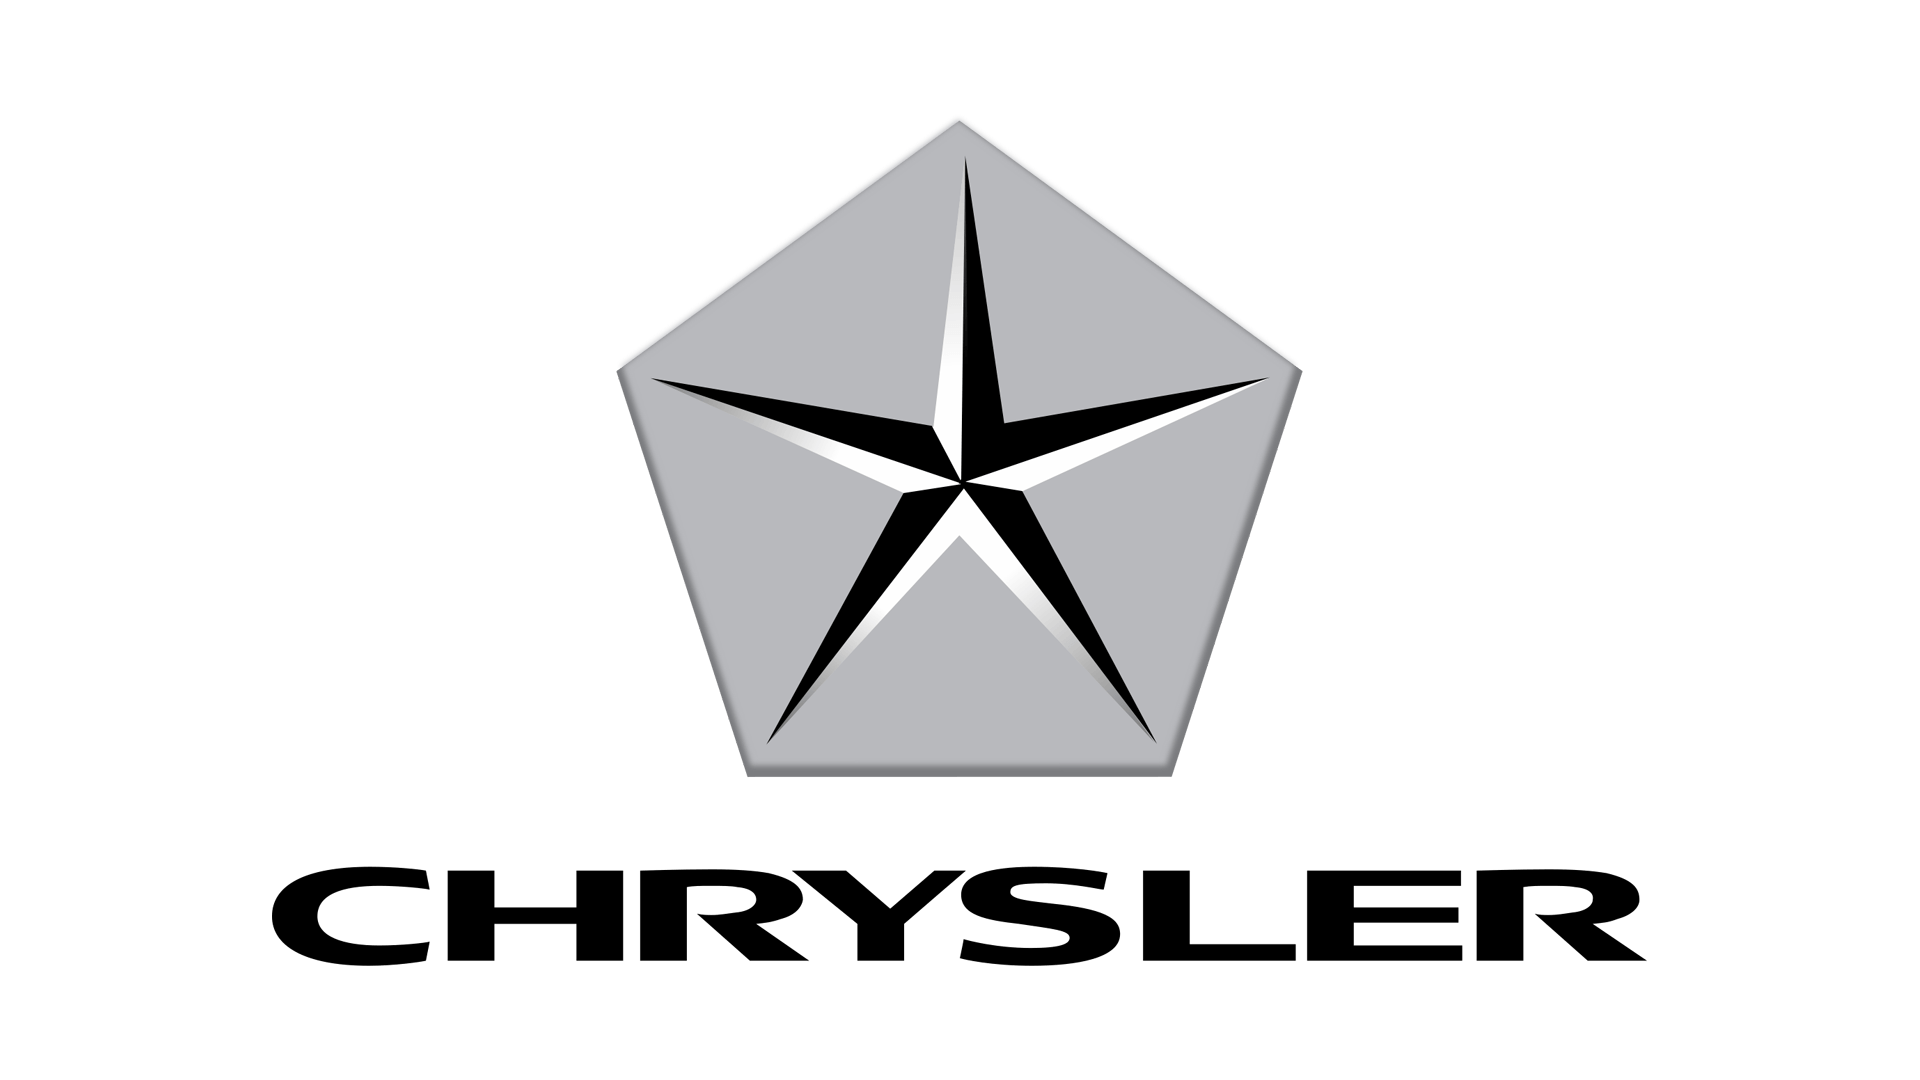 FCA Car Logo - Pin by Johnny Elf on Automobile Logos | Pinterest | Chrysler logo ...